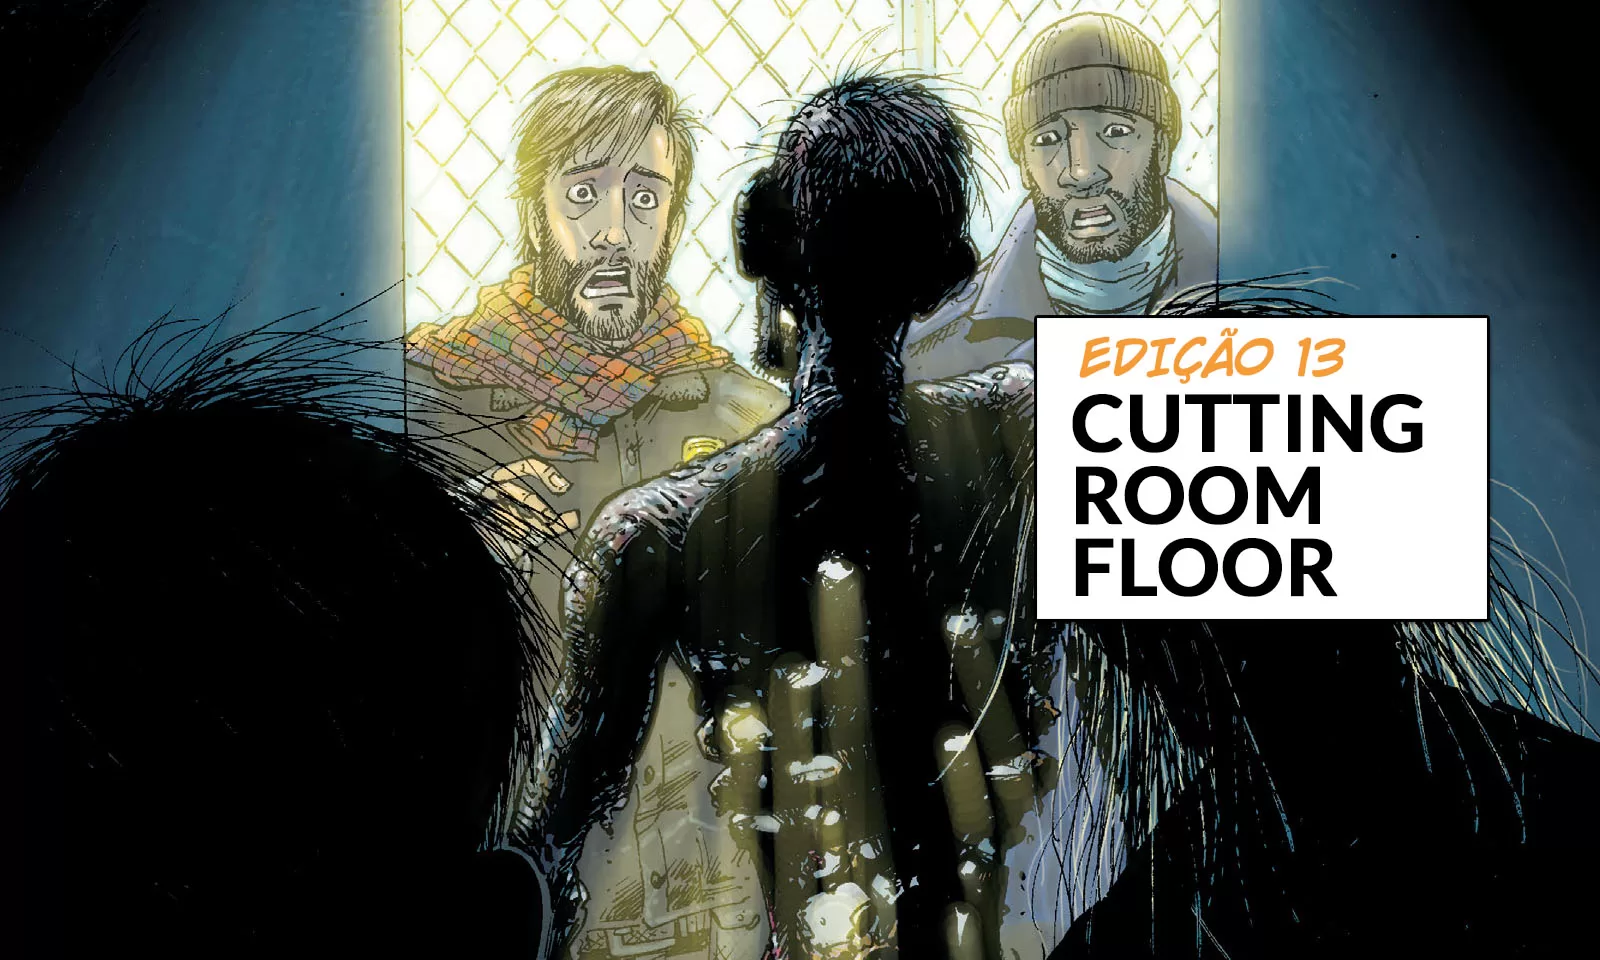 Arte com imagem da capa da The Walking Dead Deluxe 13 para o Cutting Room Floor.